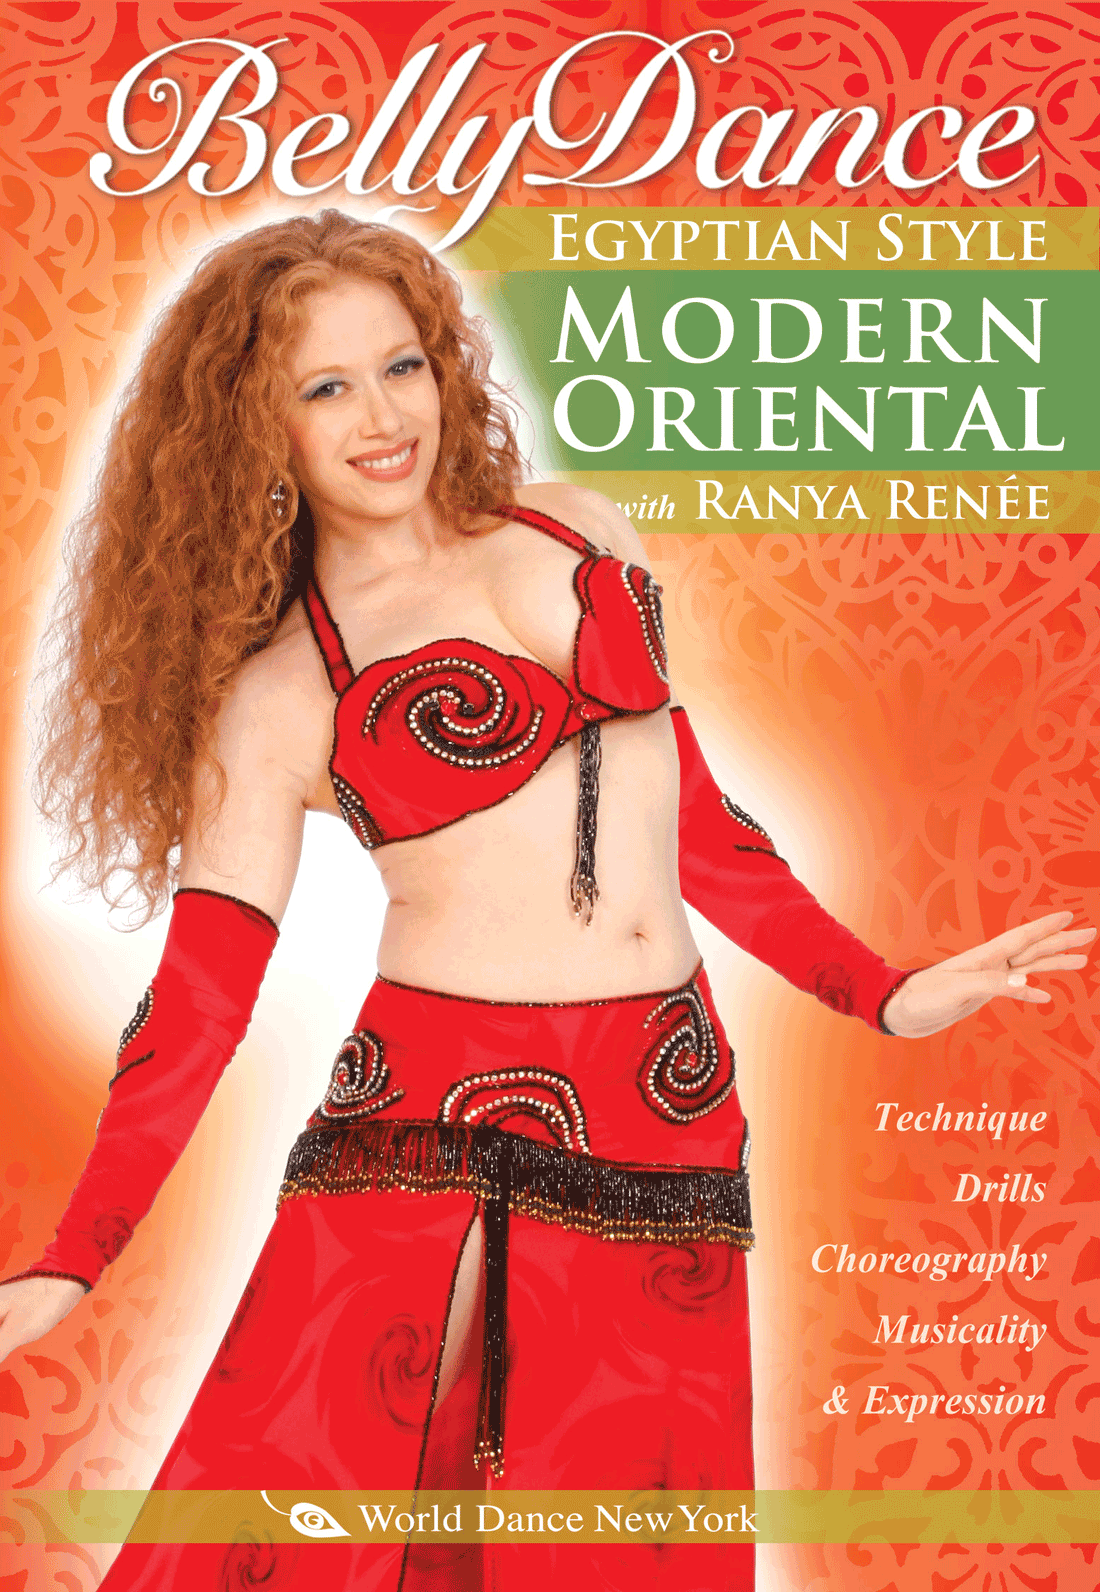 Modern Oriental: Belly Dance Egyptian Style with Ranya Renée - INSTANT VIDEO / DVD - World Dance New York